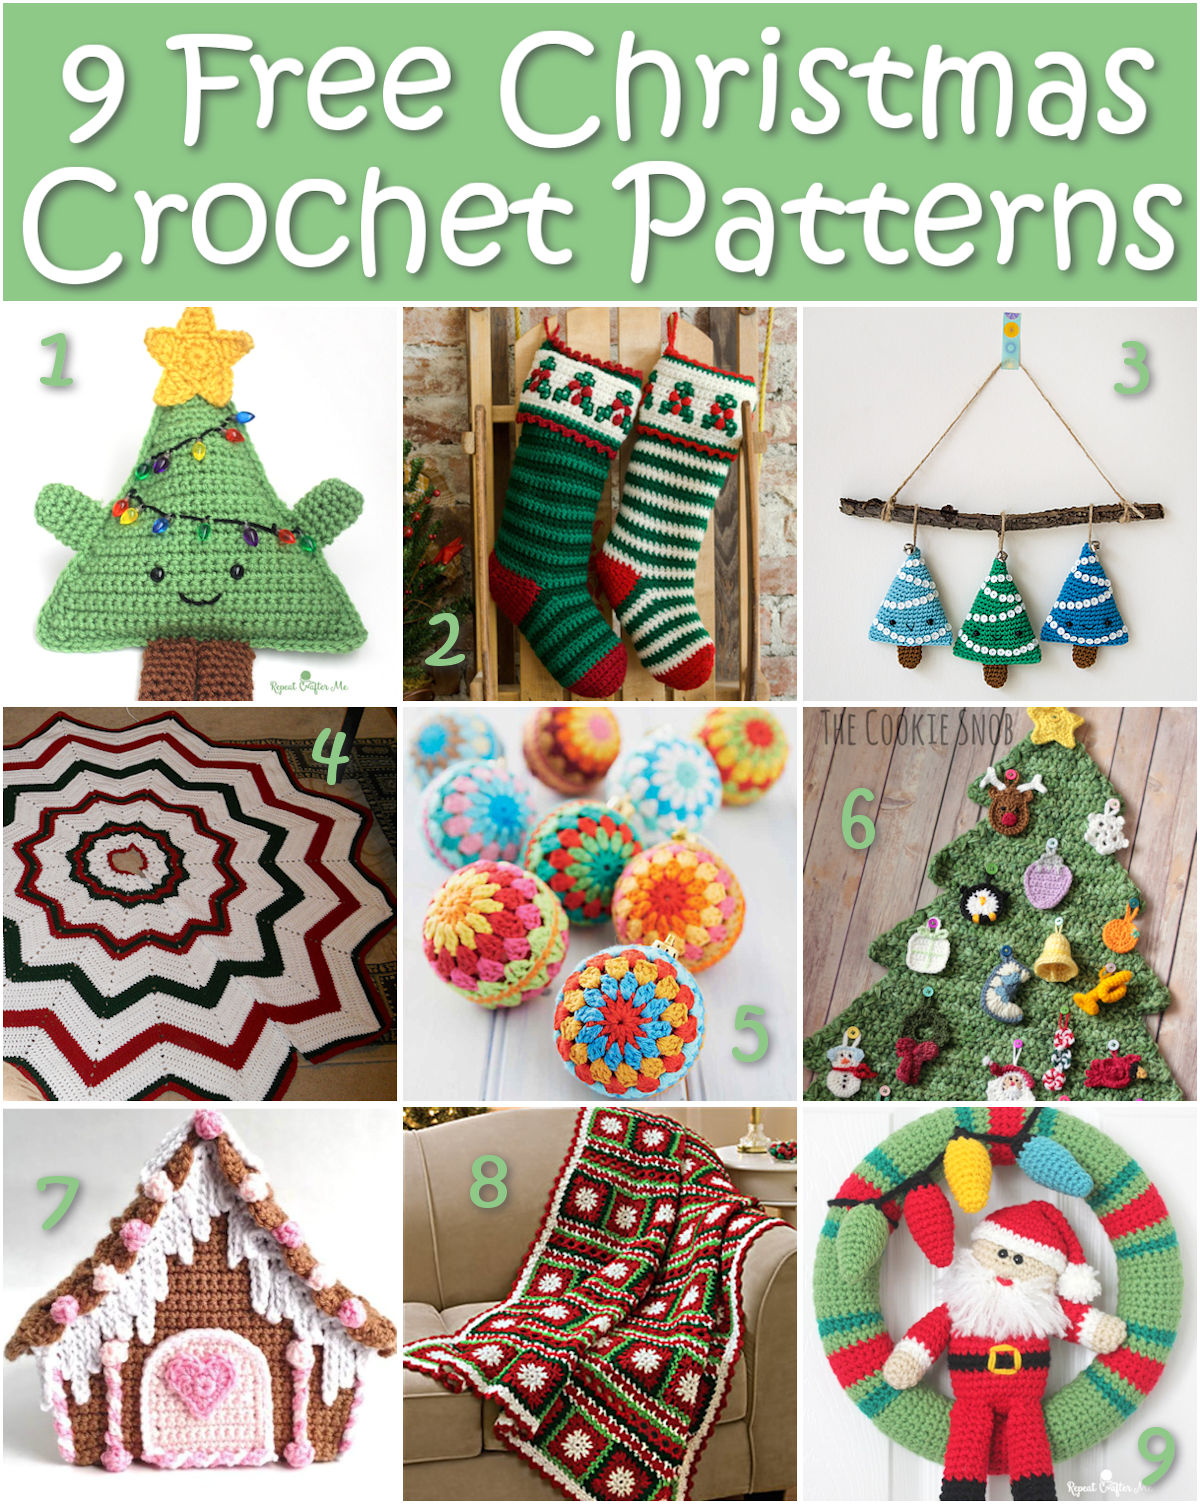 9 Free Christmas Crochet Patterns |